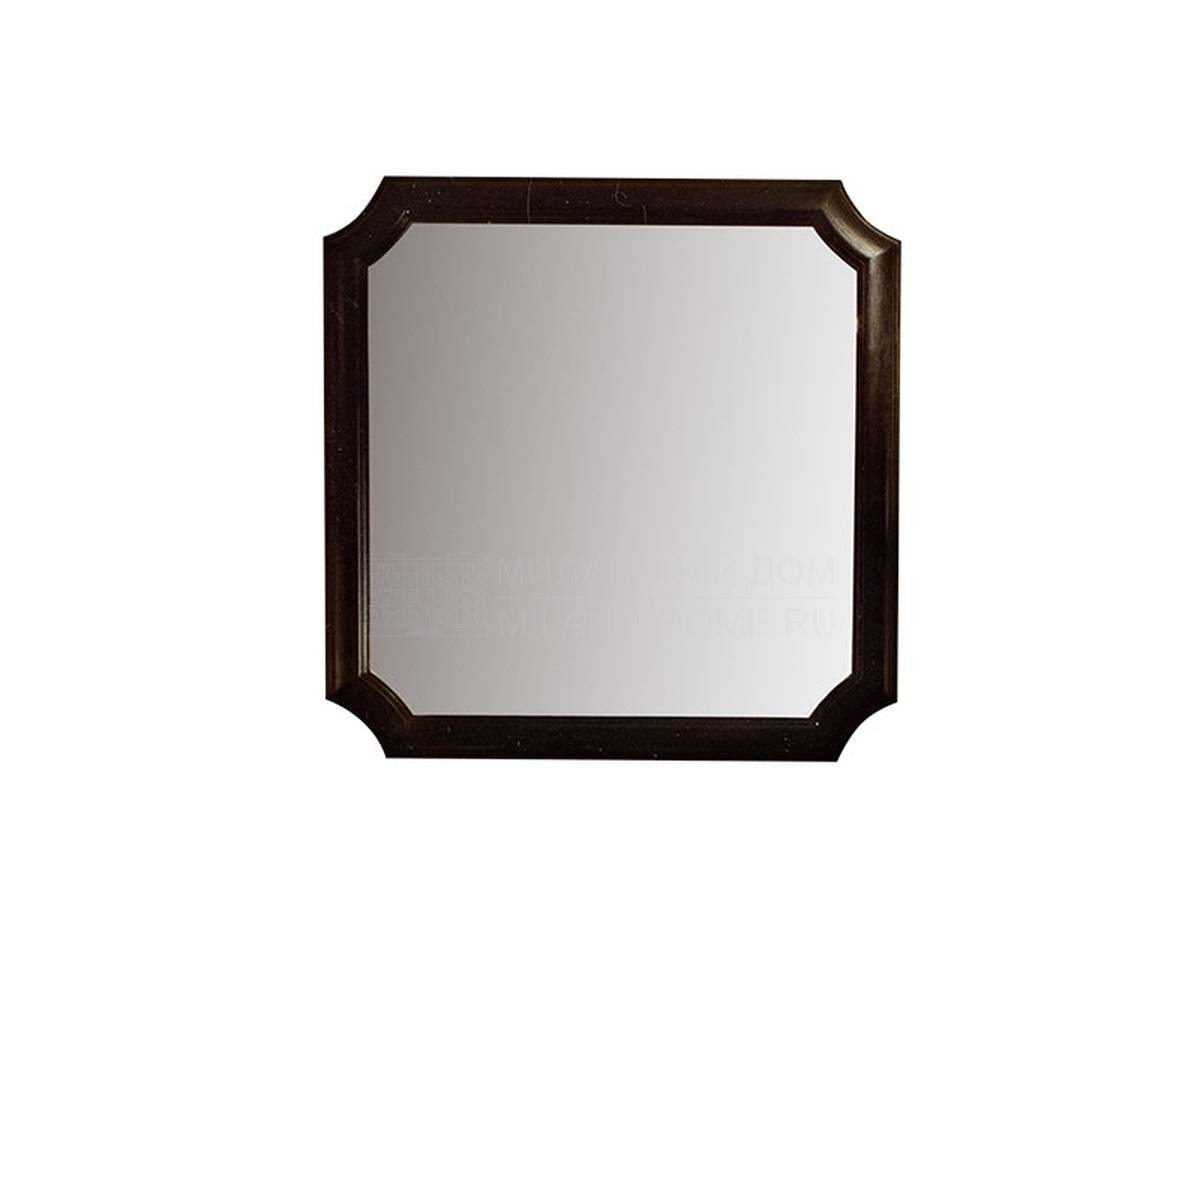 Зеркало настенное Black/mirror из Италии фабрики SOFTHOUSE